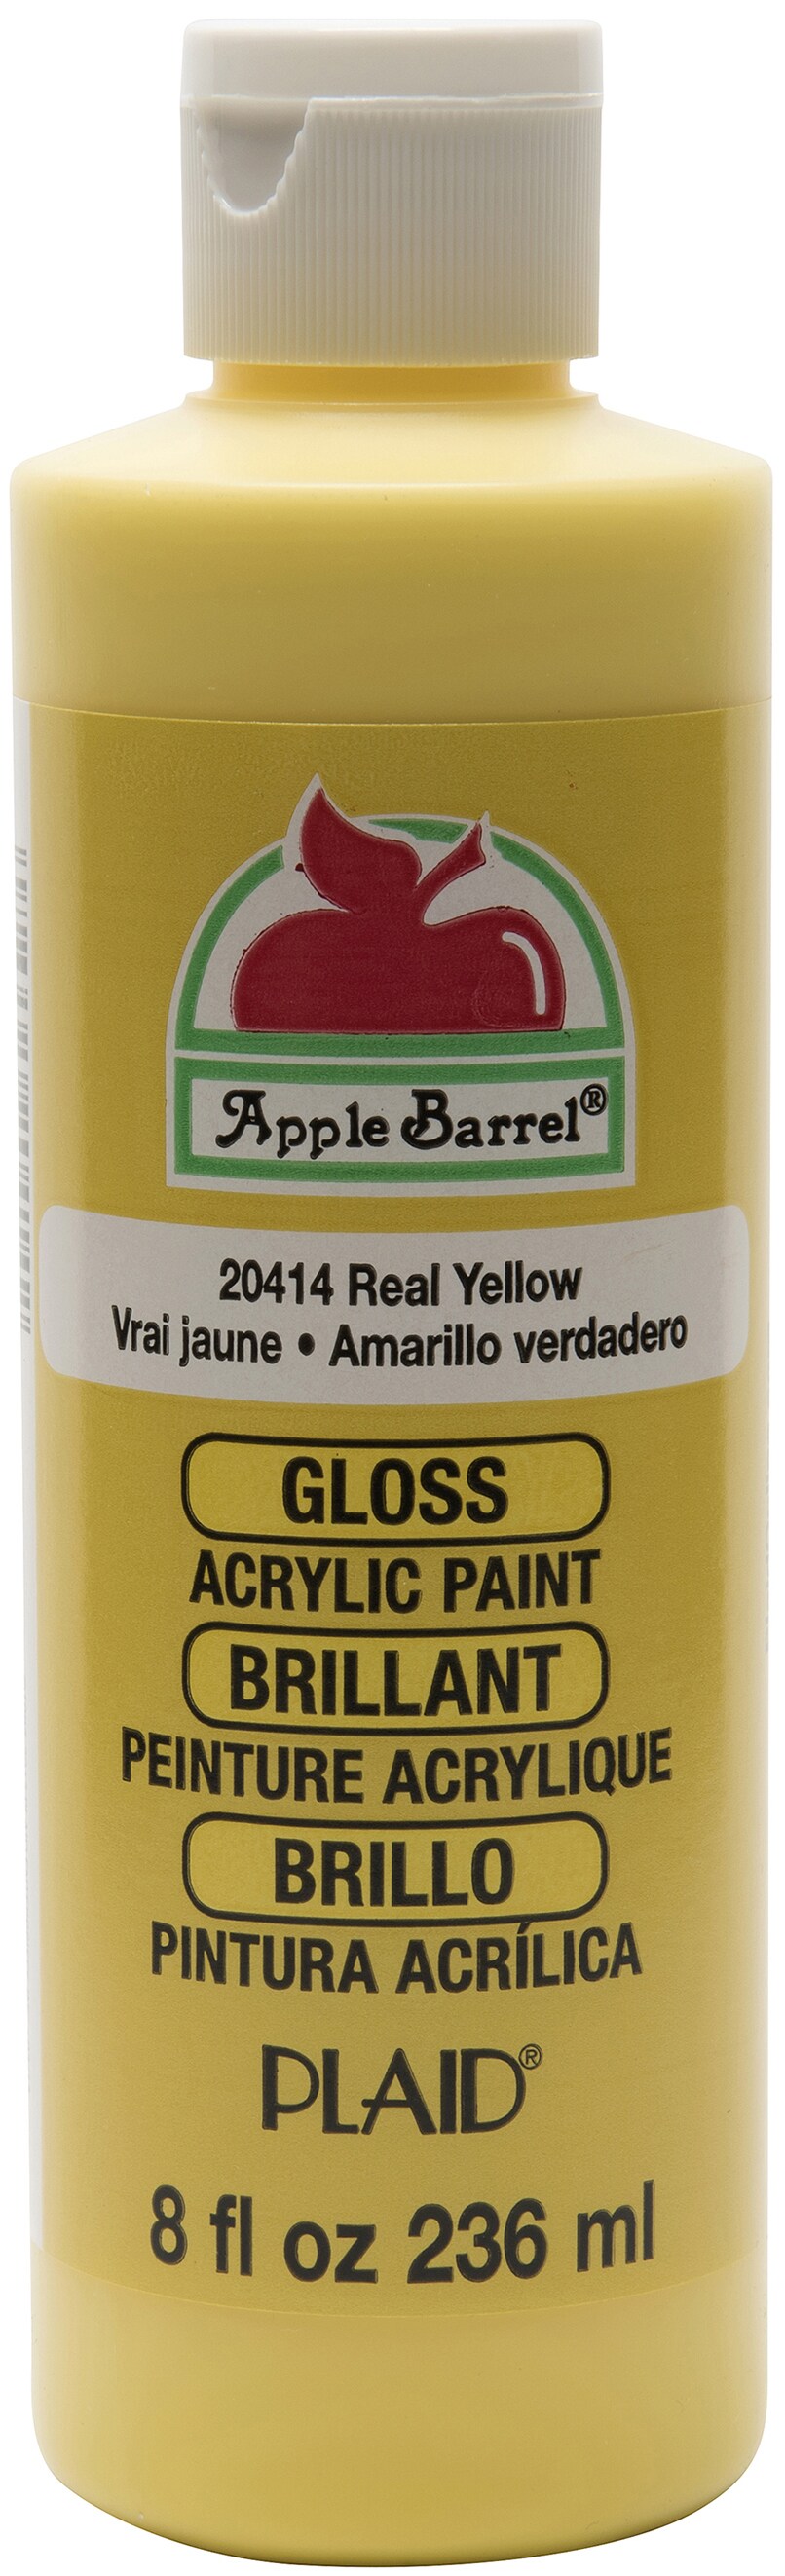 Apple Barrel Gloss Acrylic Paint 8Oz-Real Yellow